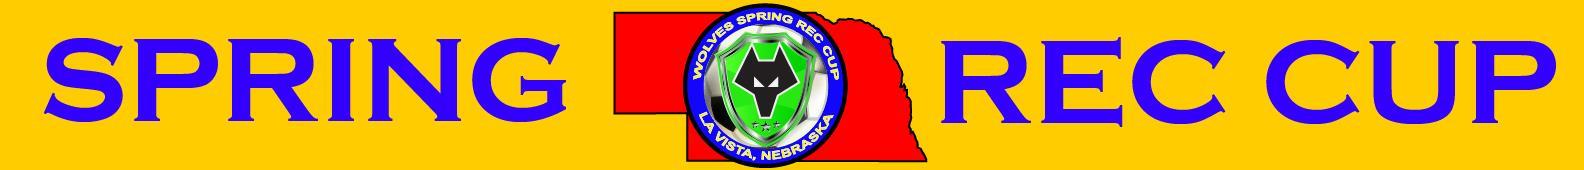 2019 Wolves Spring Rec Cup banner